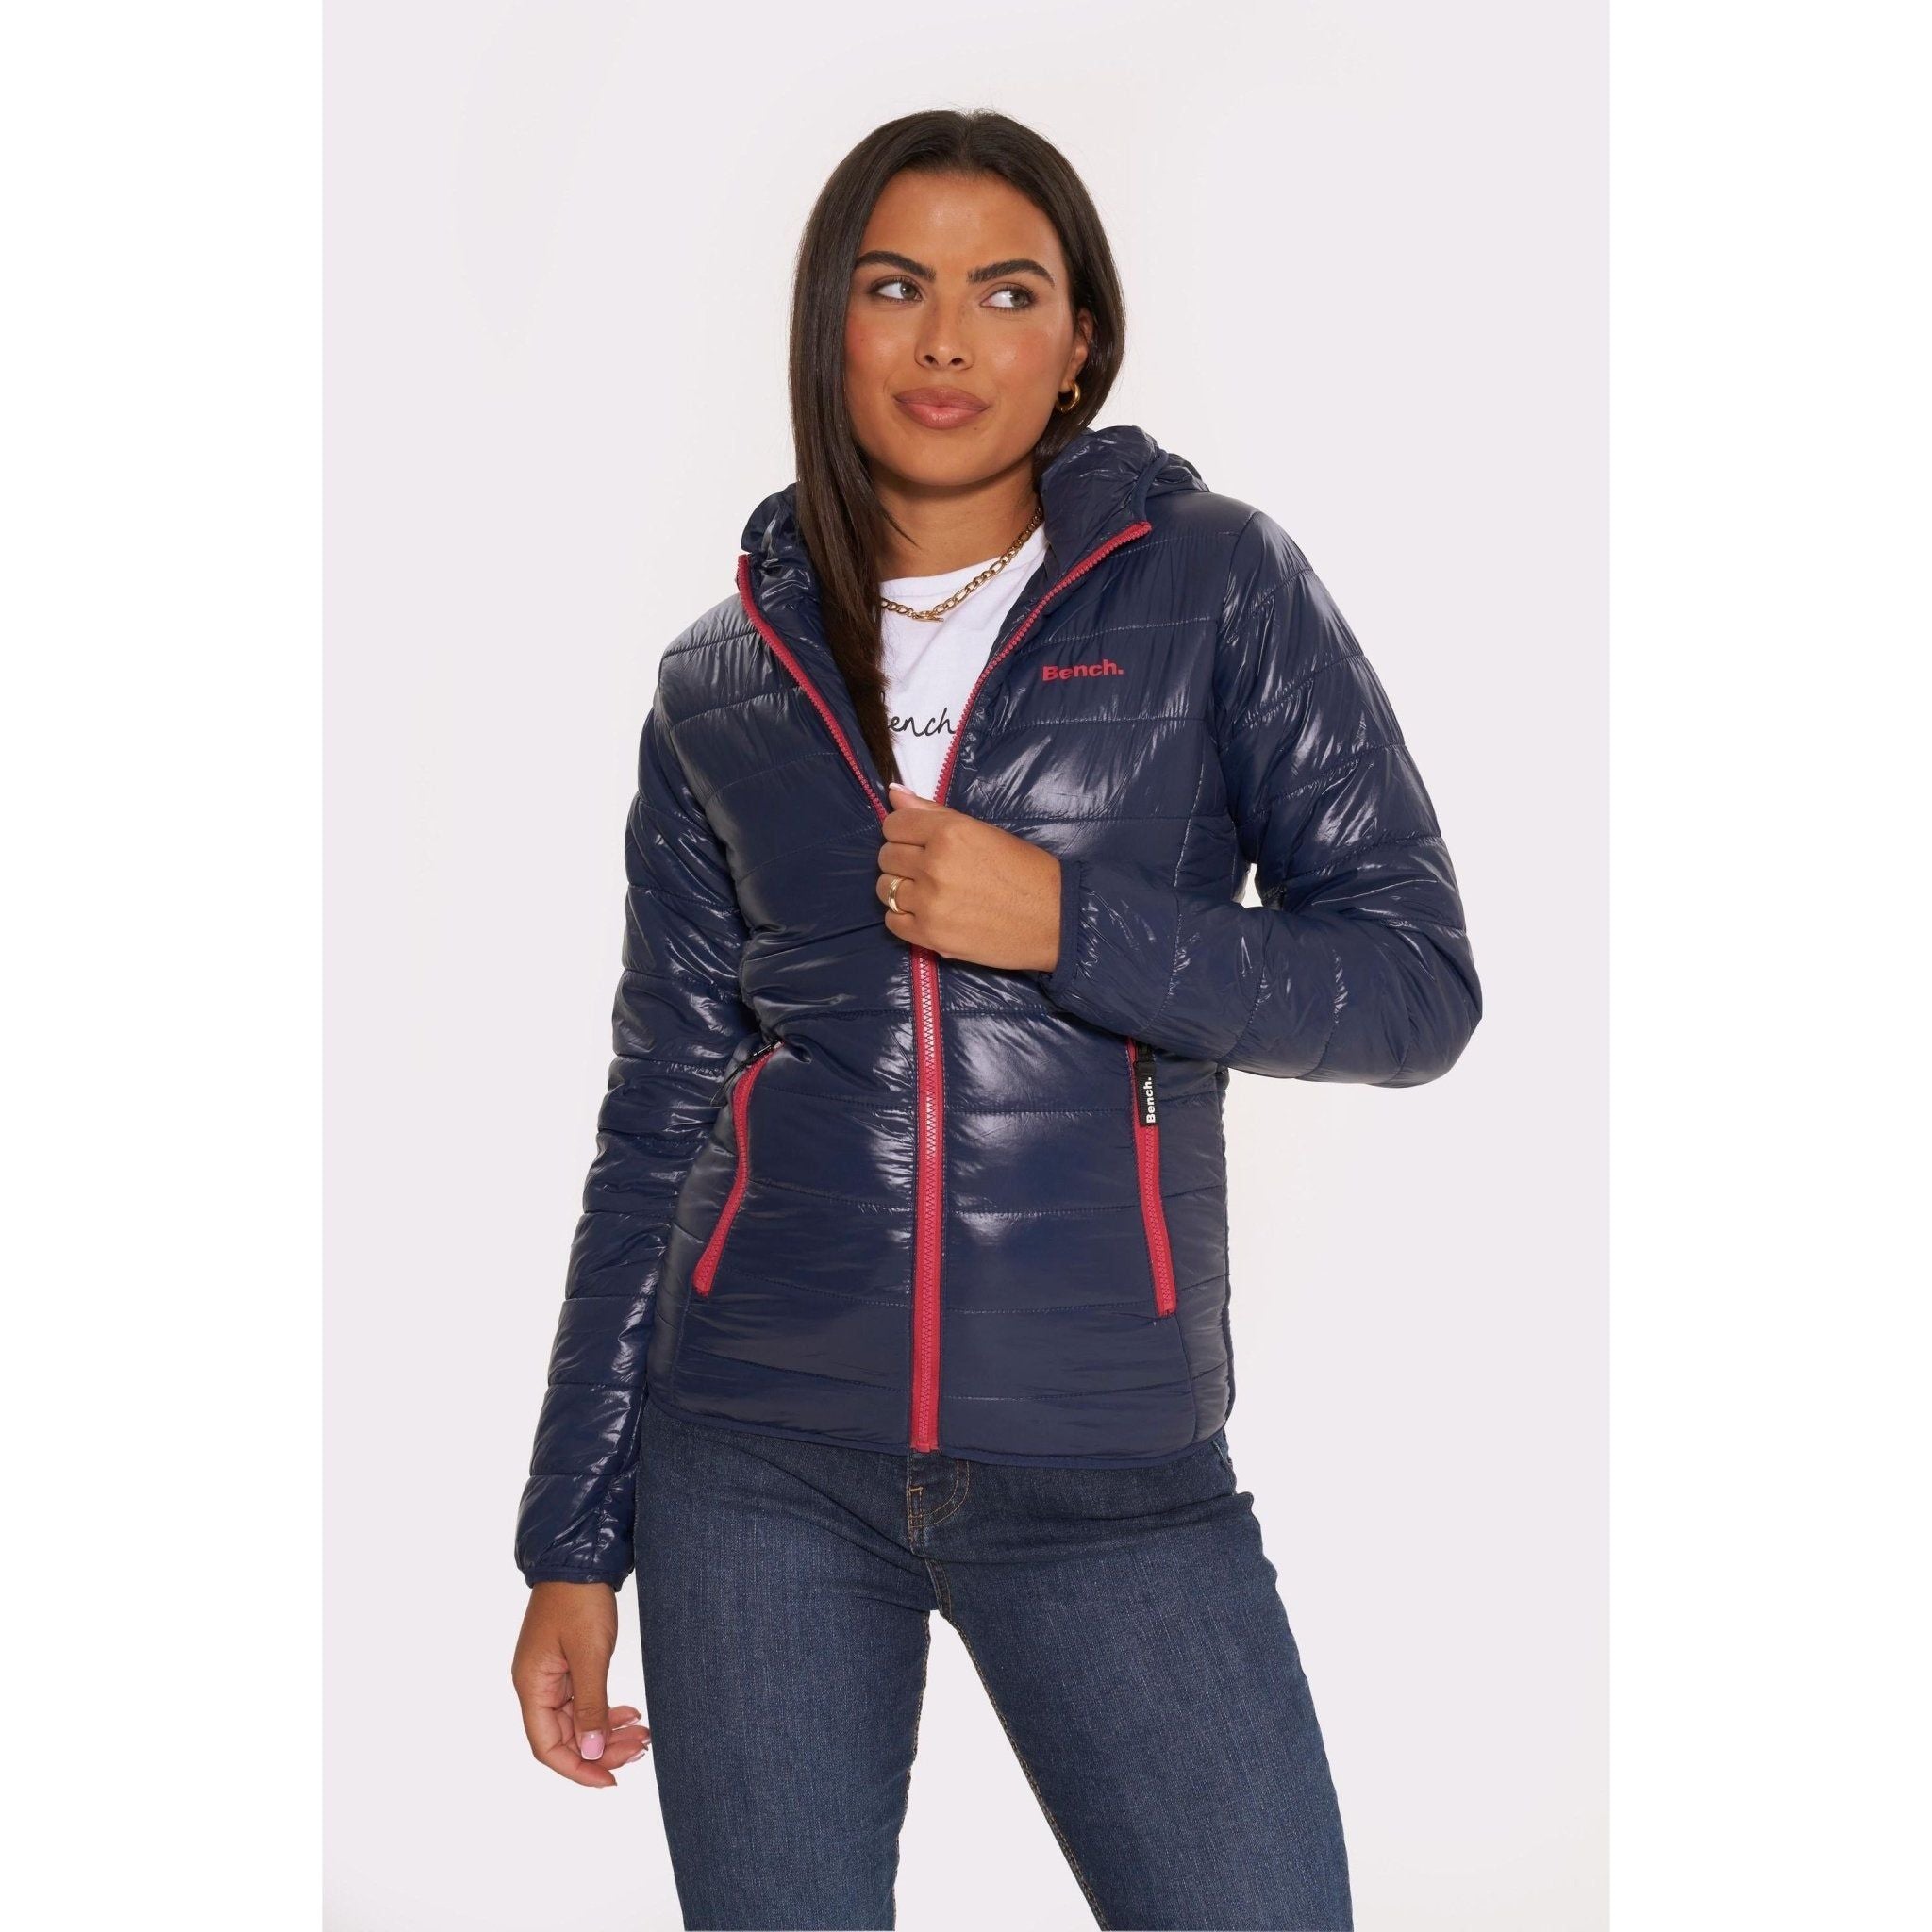 Womens 'KARA' Jacket - NAVY - Shop at www.Bench.co.uk #LoveMyHood